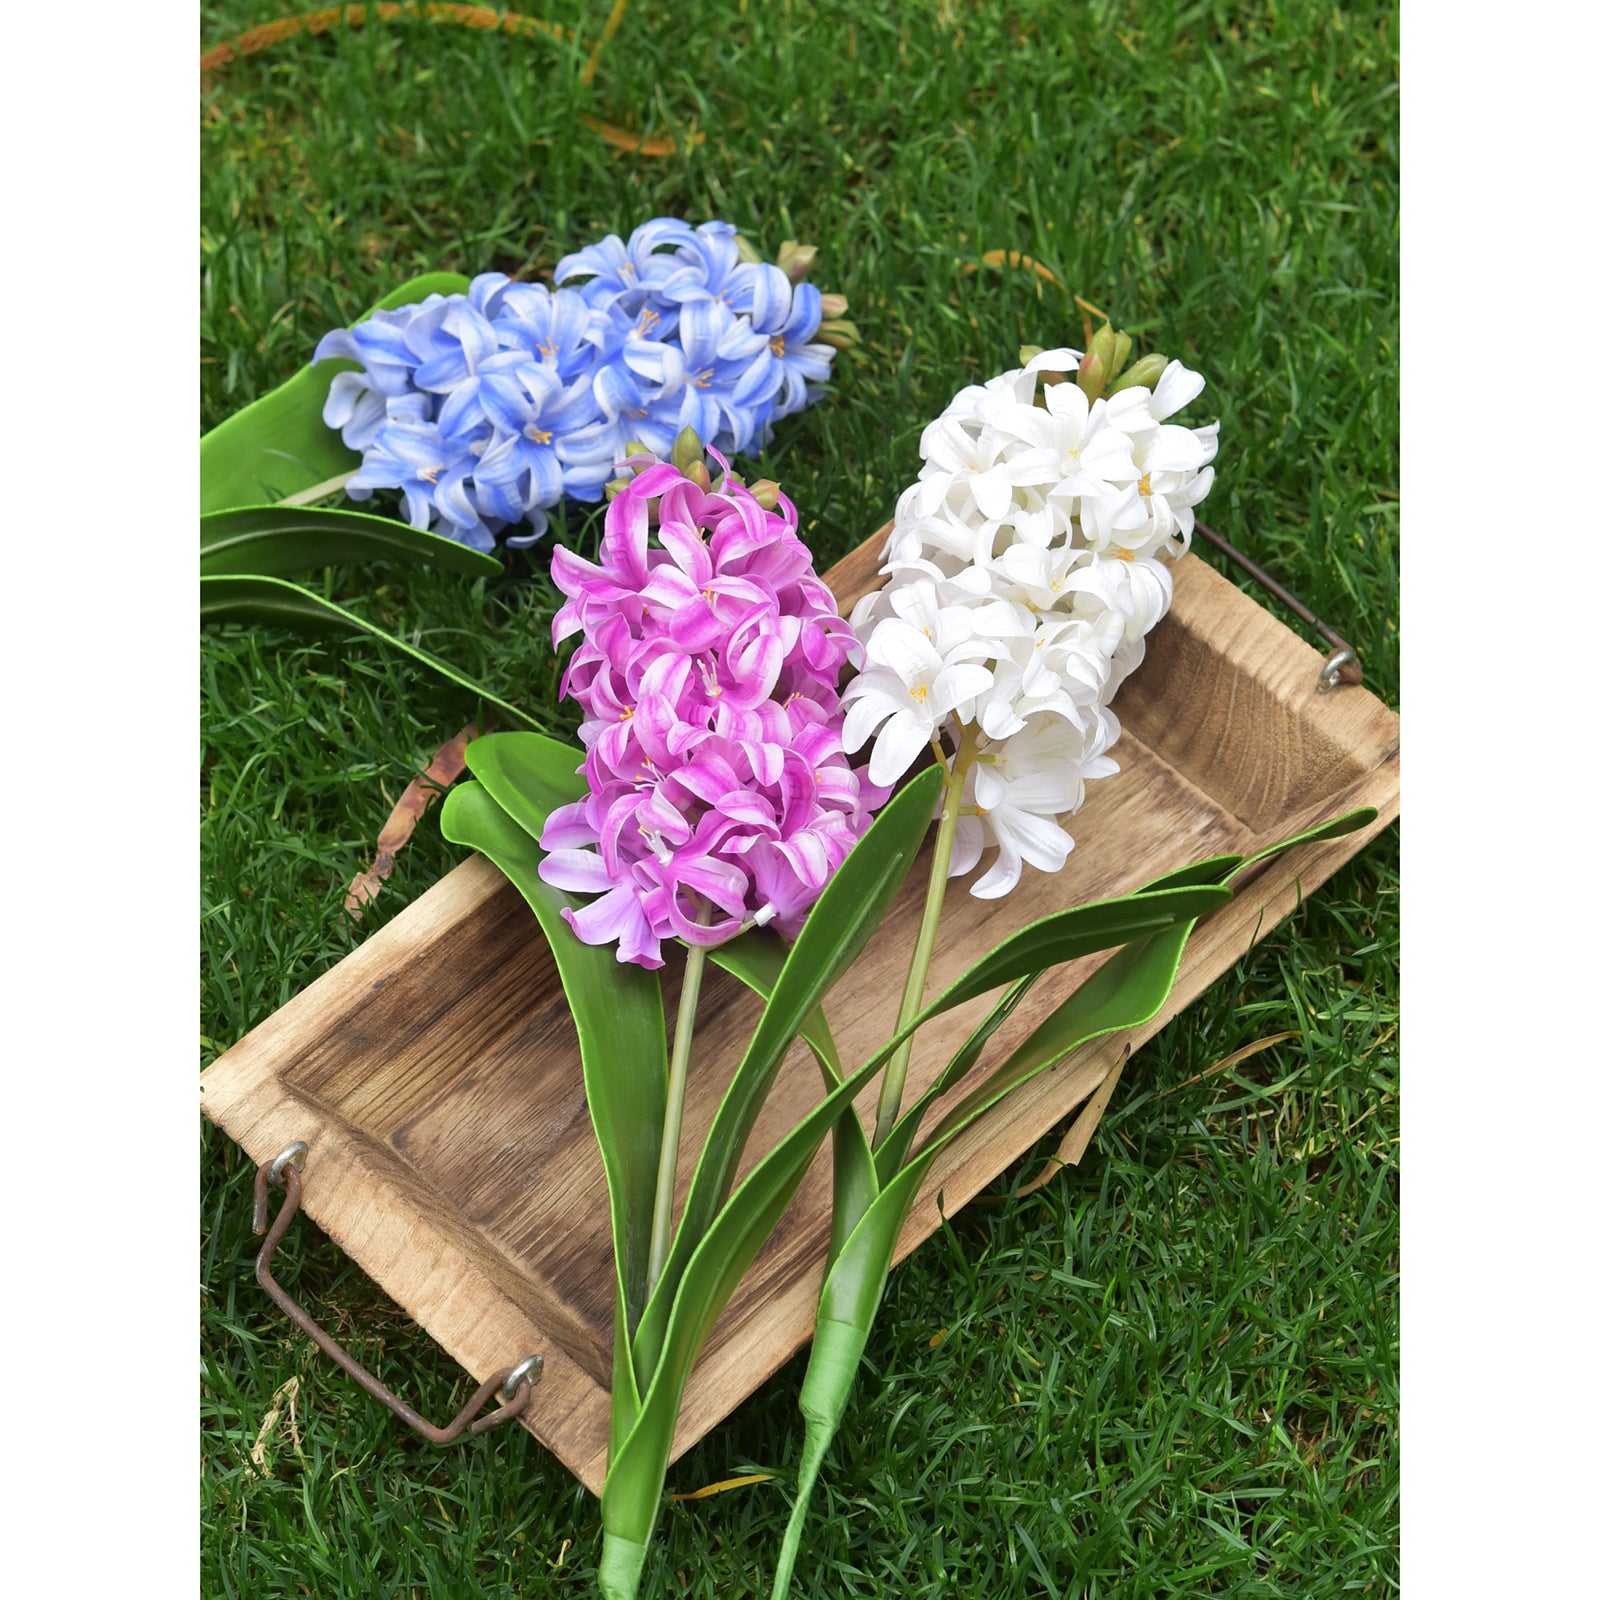 Real Touch Hyacinth (Fuchsia Pink) Artificial Flowers ‘Petals Feel and Look like Fresh Hyacinth' Wedding, Home Decor, Arrangement 2 Stems -FiveSeasonStuff